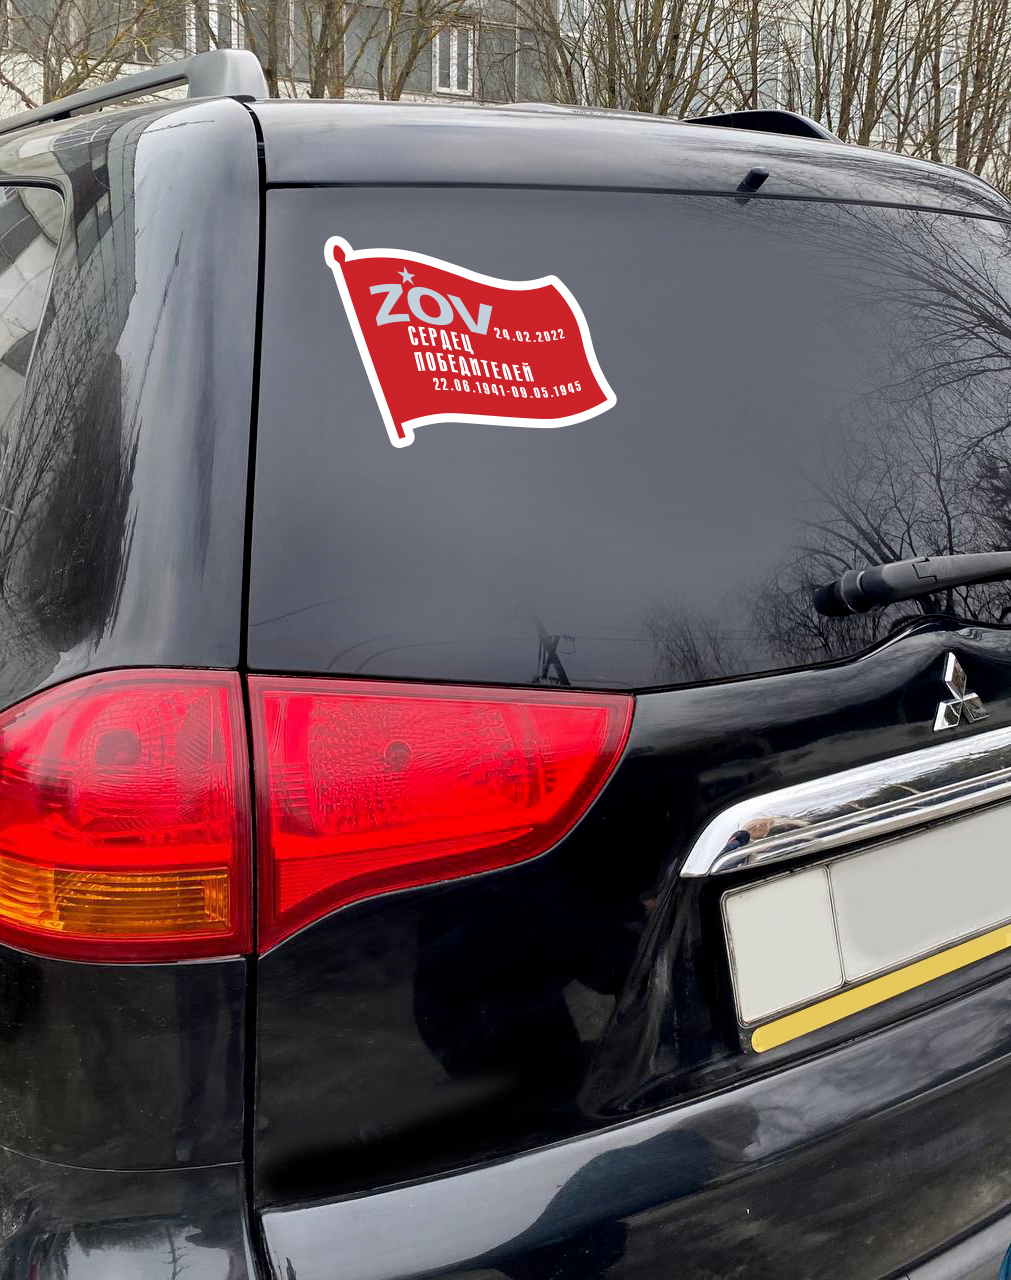 Наклейка на машину "ZOV сердец победителей"